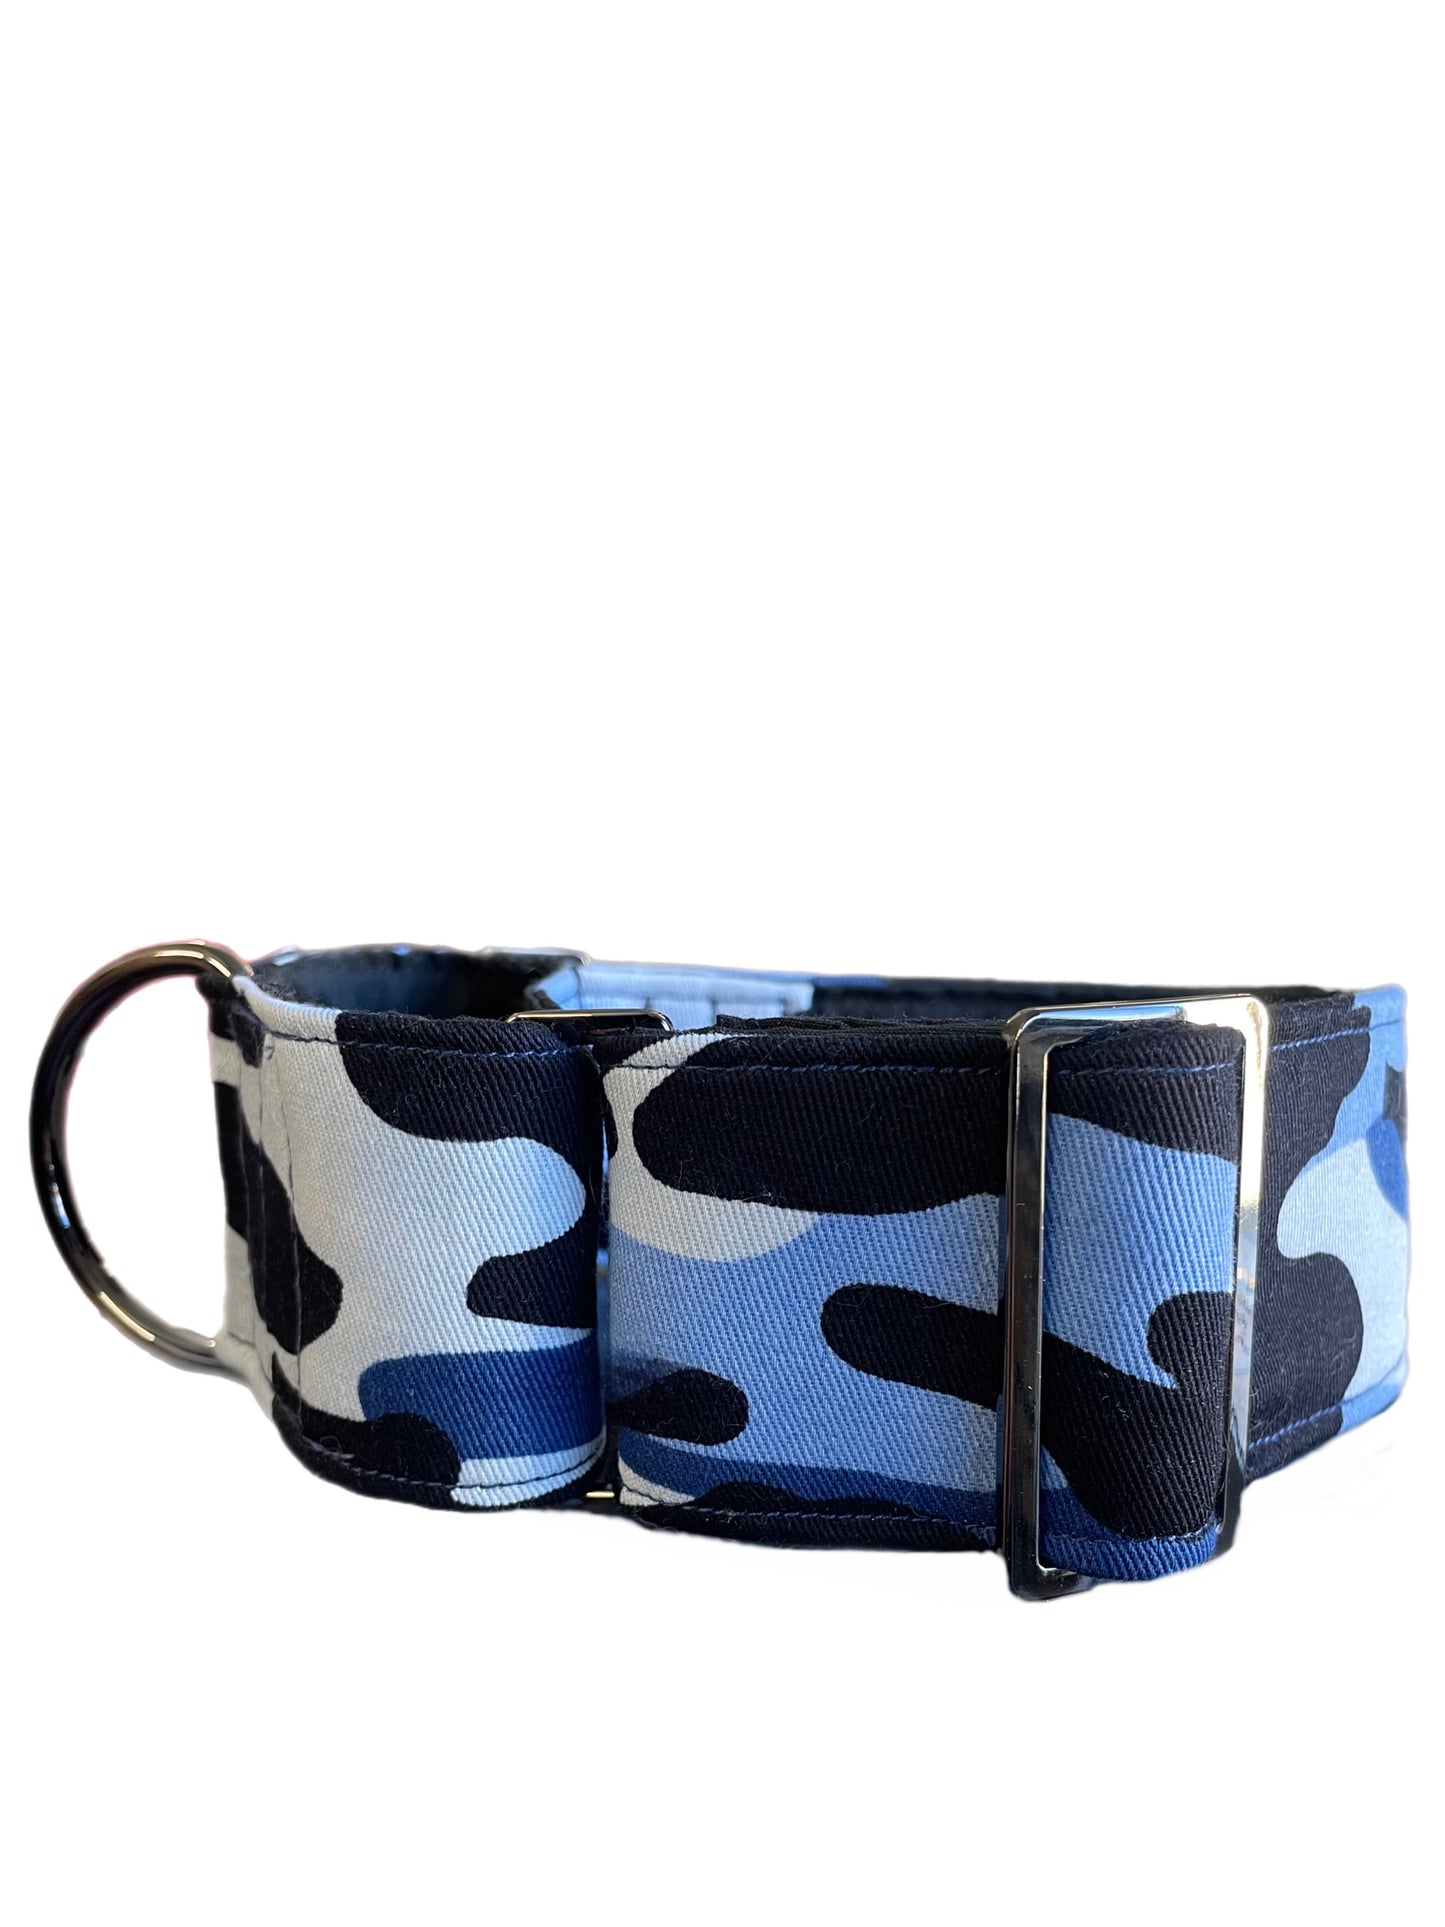 Martingale collar greyhound collar navy blue Cammo design cotton fabric